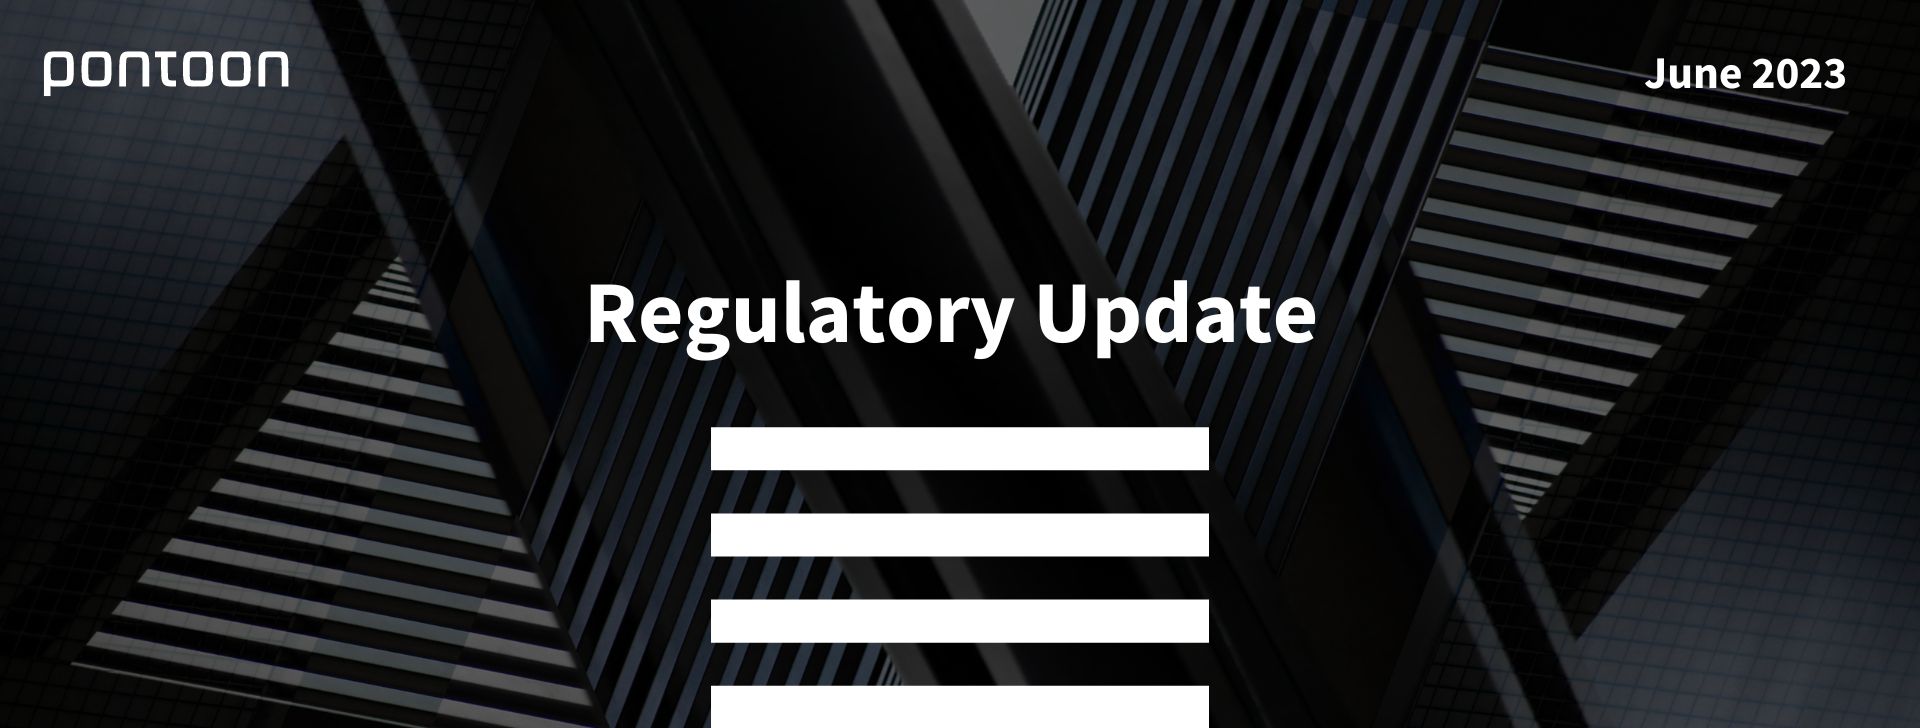 Pontoon Regulatory Update Header - June 2023